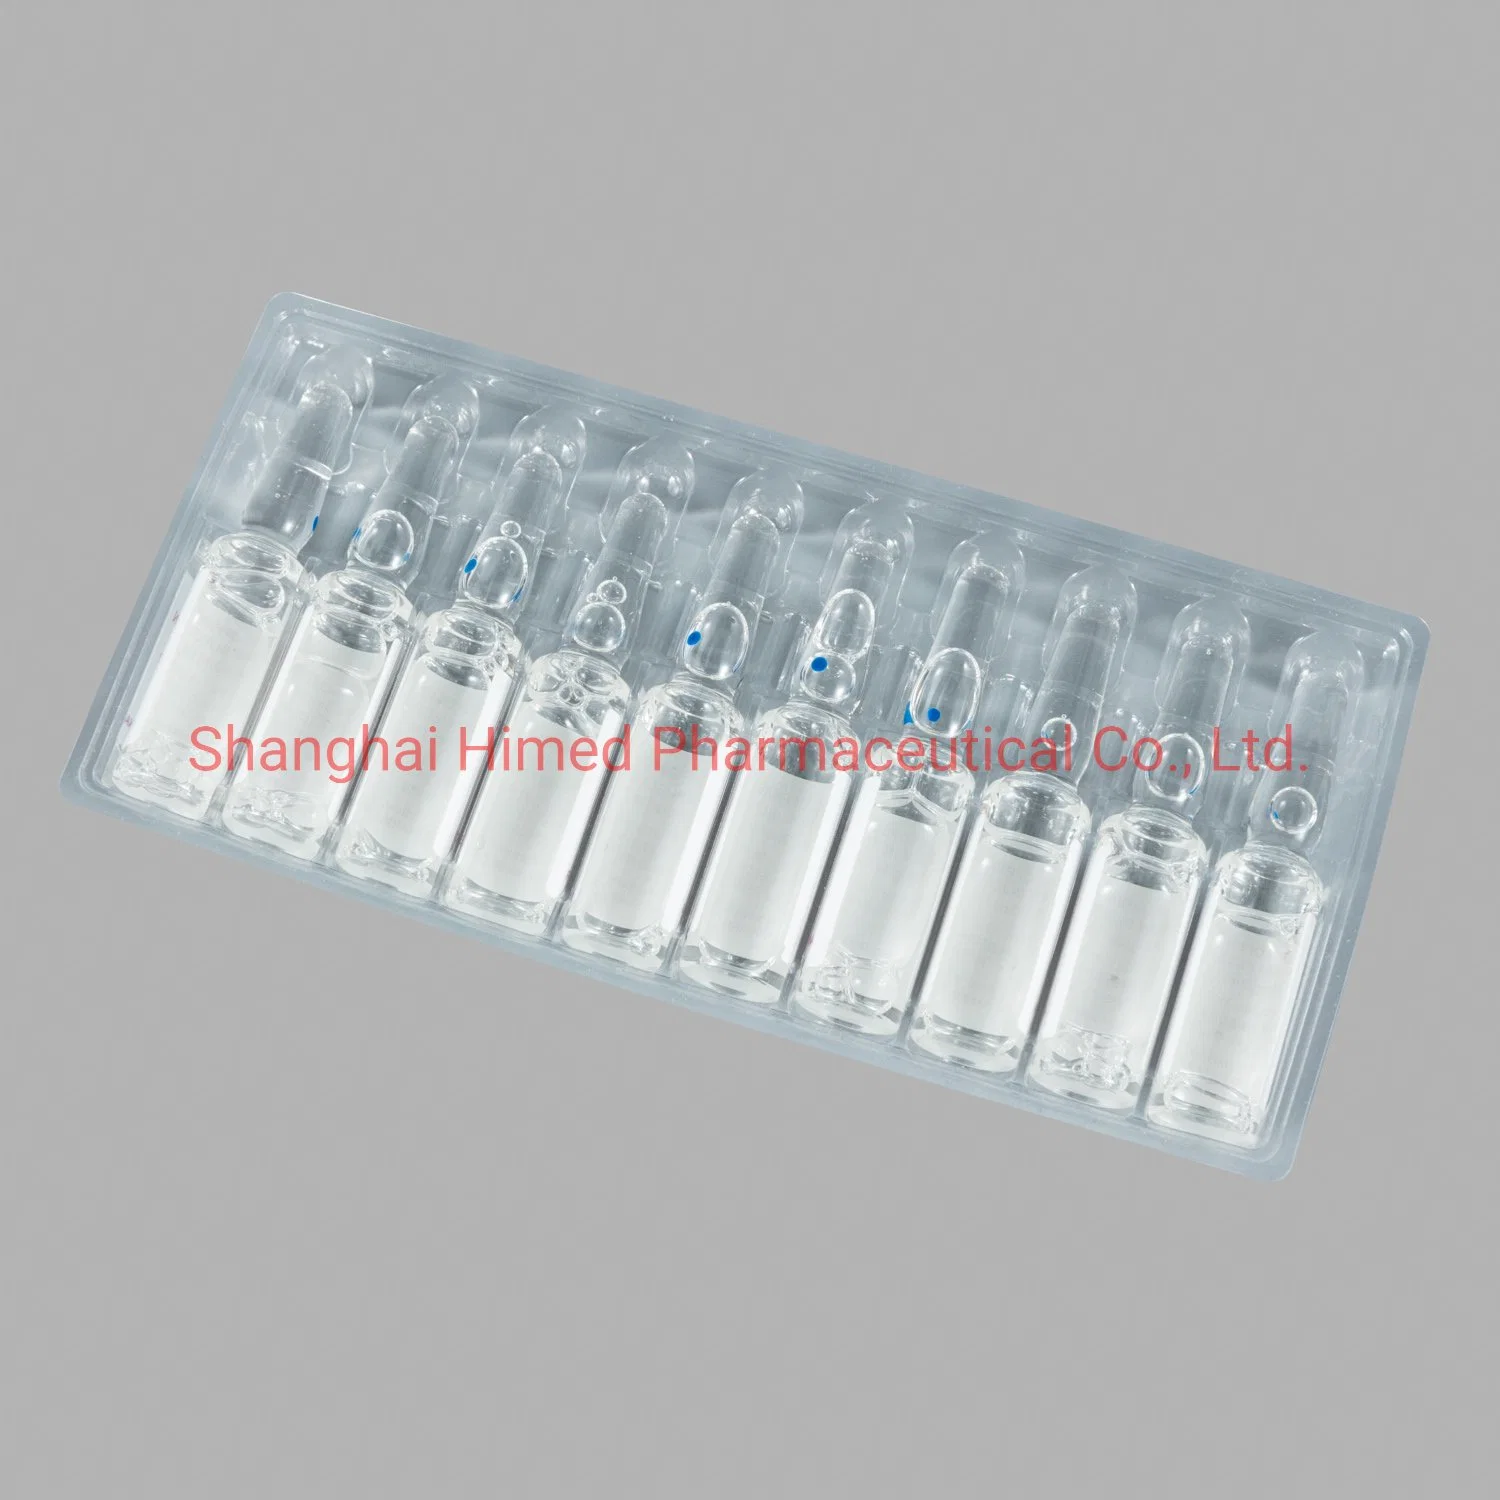 Lidocain Hydrochlorid Injection Pharmaceutical Product 2ml: 4mg, 2ml: 150mg, 5ml: 100mg, 5ml: 50mg 1%, 10ml: 0,2g